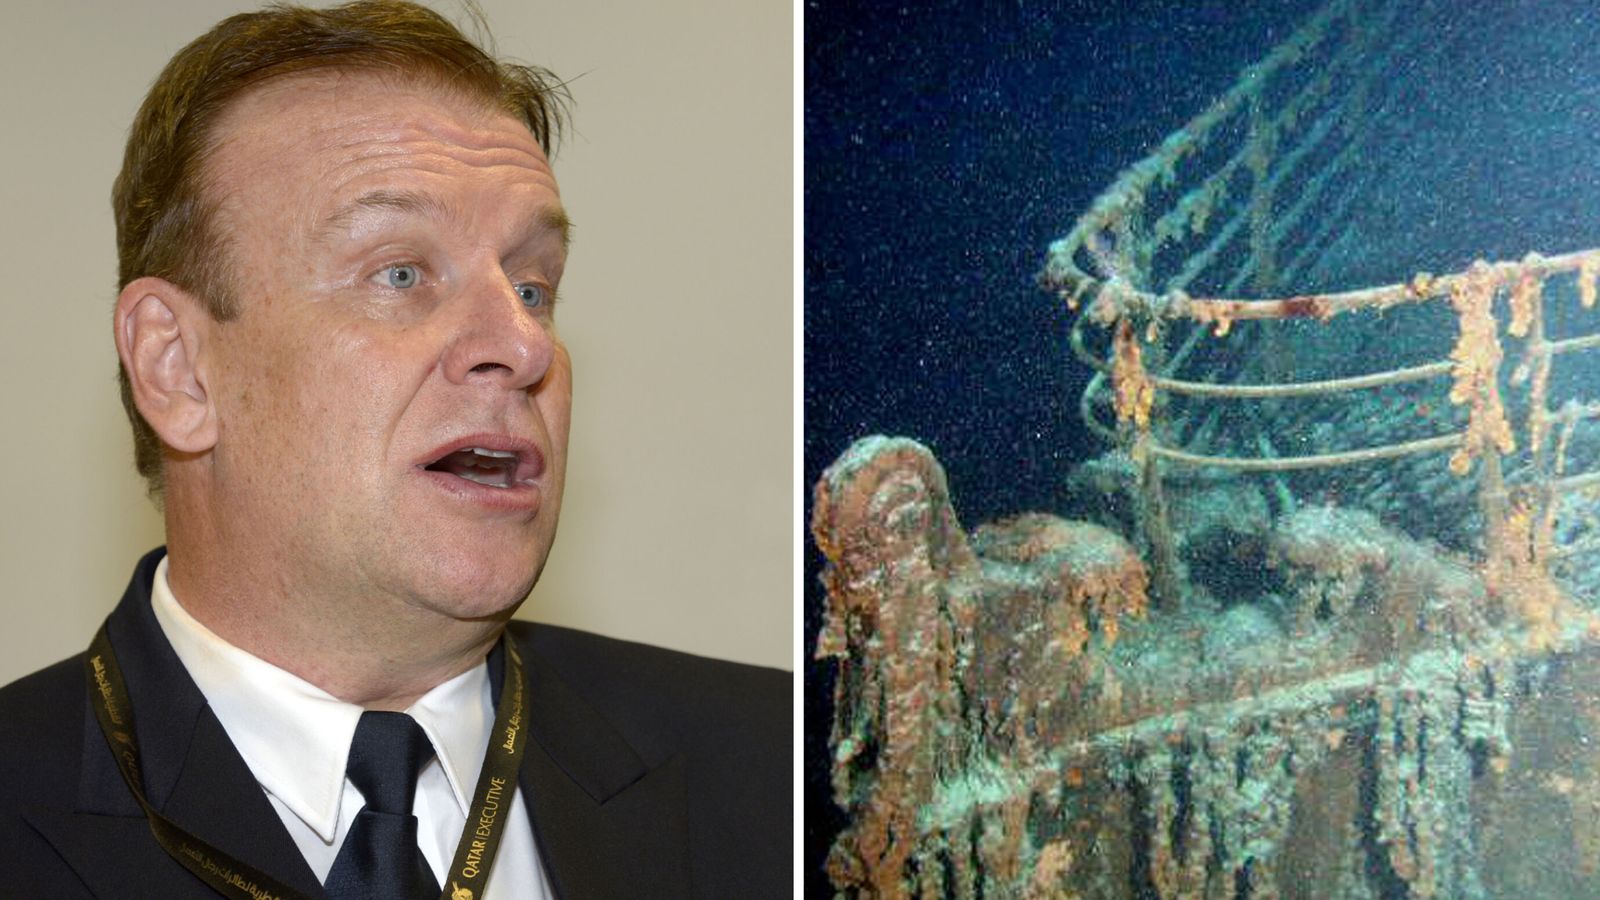 UK billionaire Hamish Harding on board missing Titanic submersible, family confirms